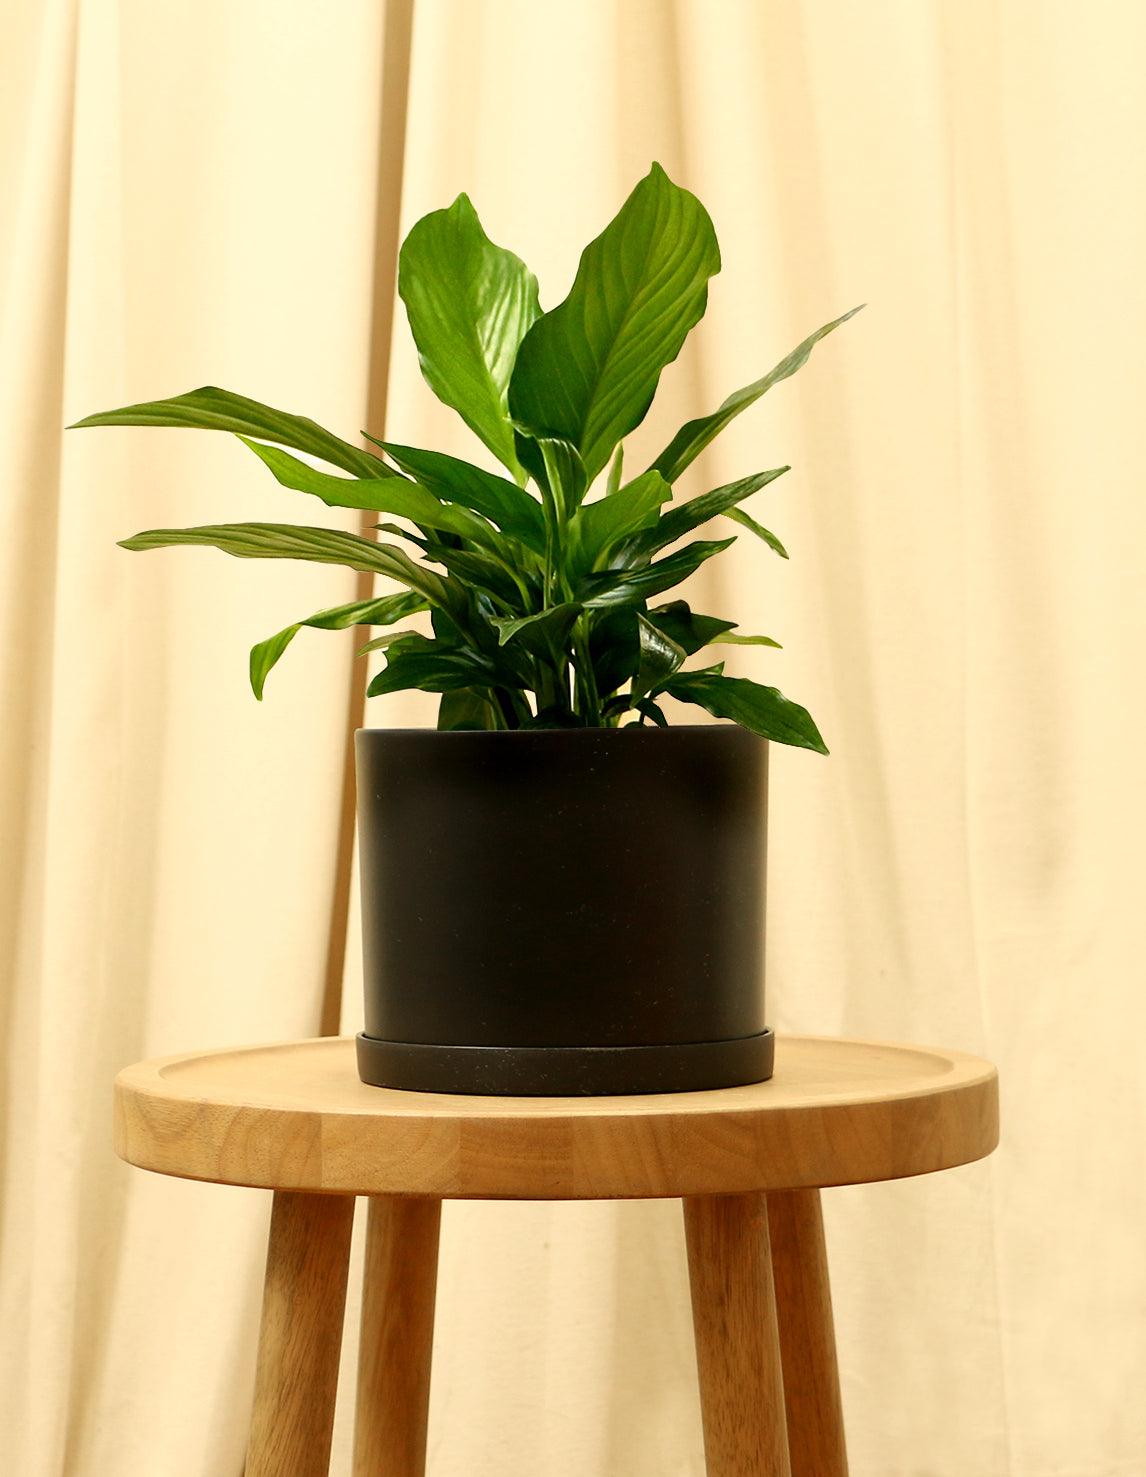 Medium Peace Lily in black pot.